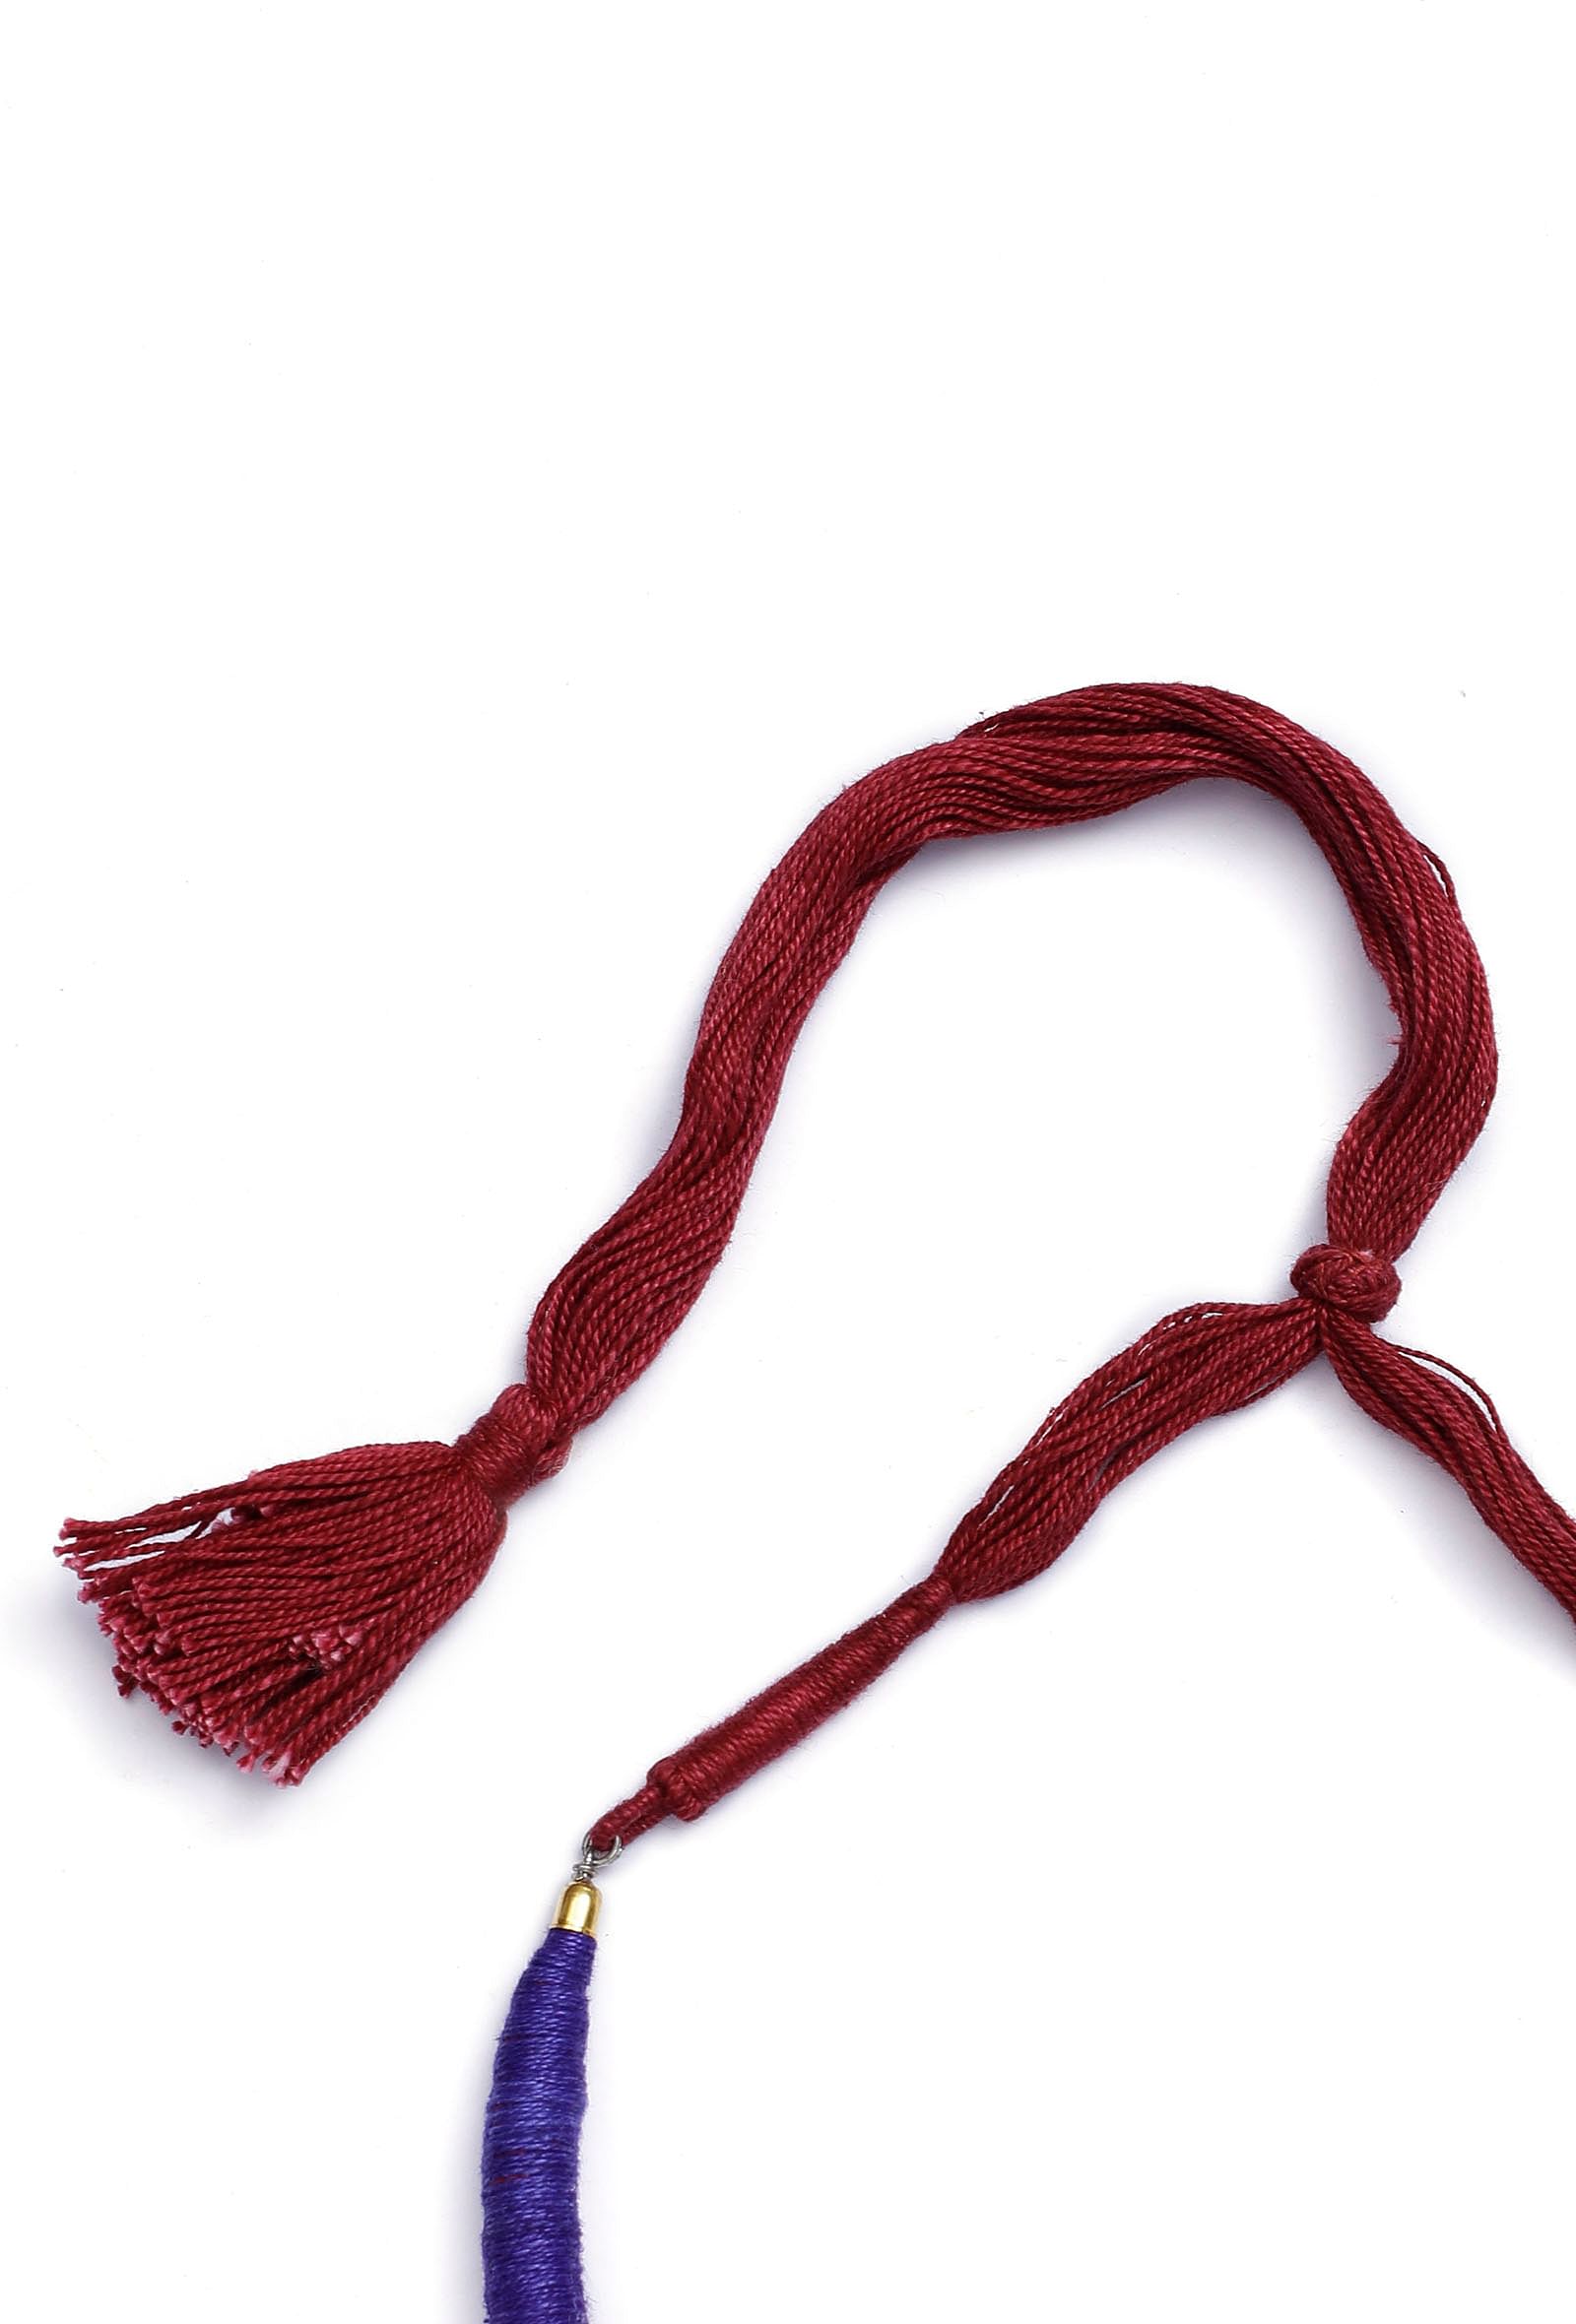 Avery Black Thread Choker Tribal Necklace